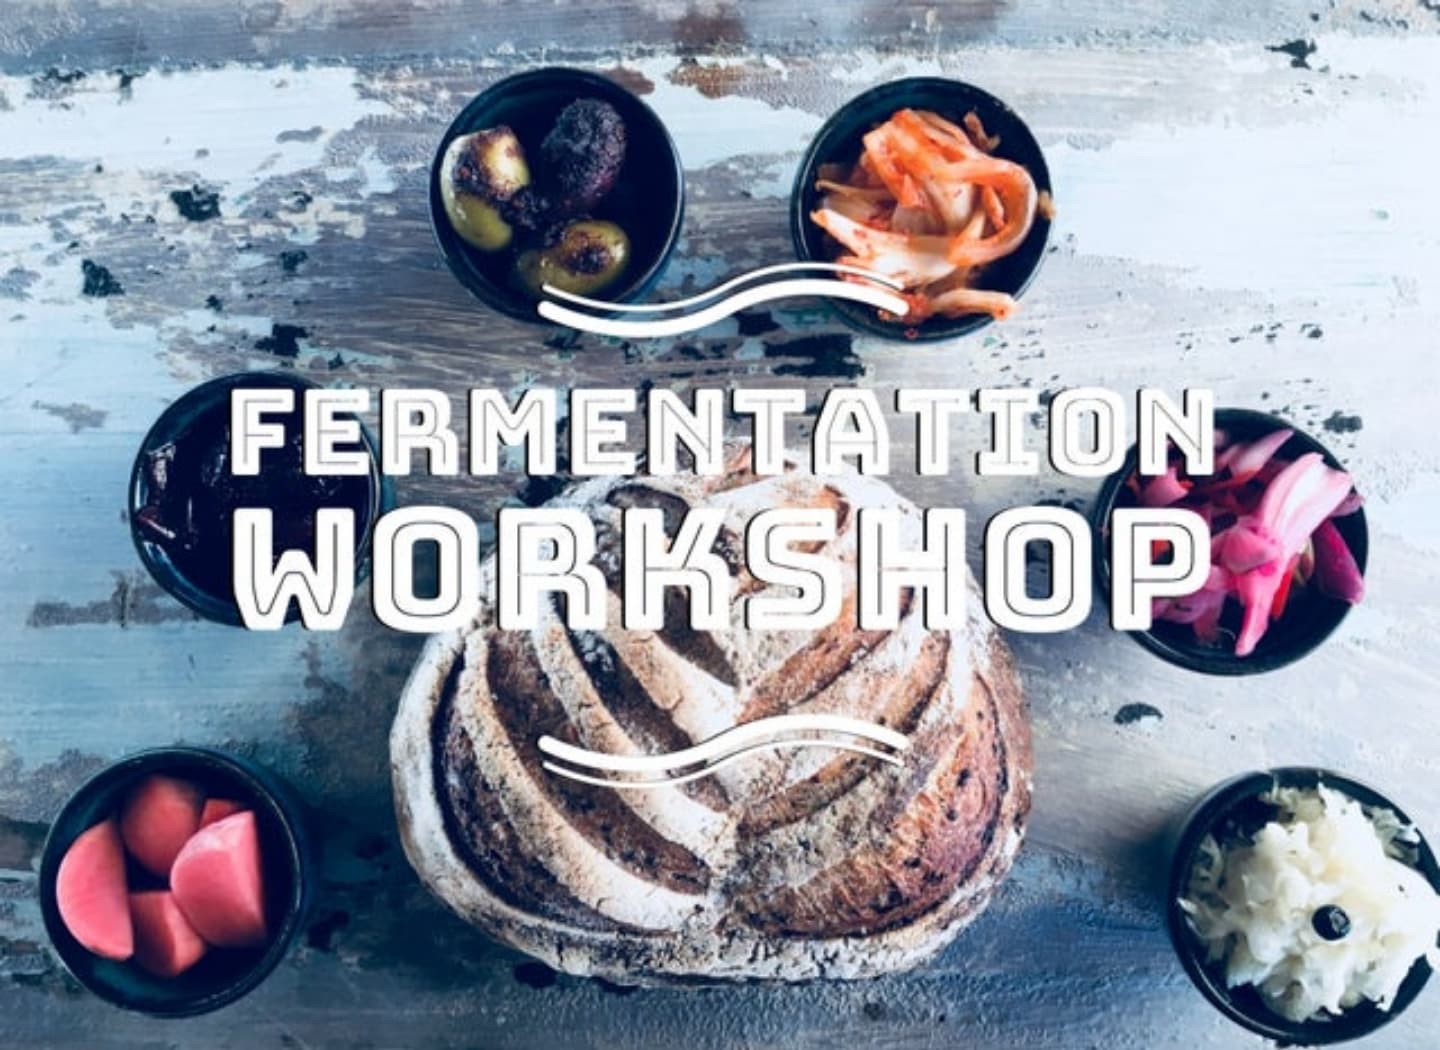 I. Introduction to Fermentation